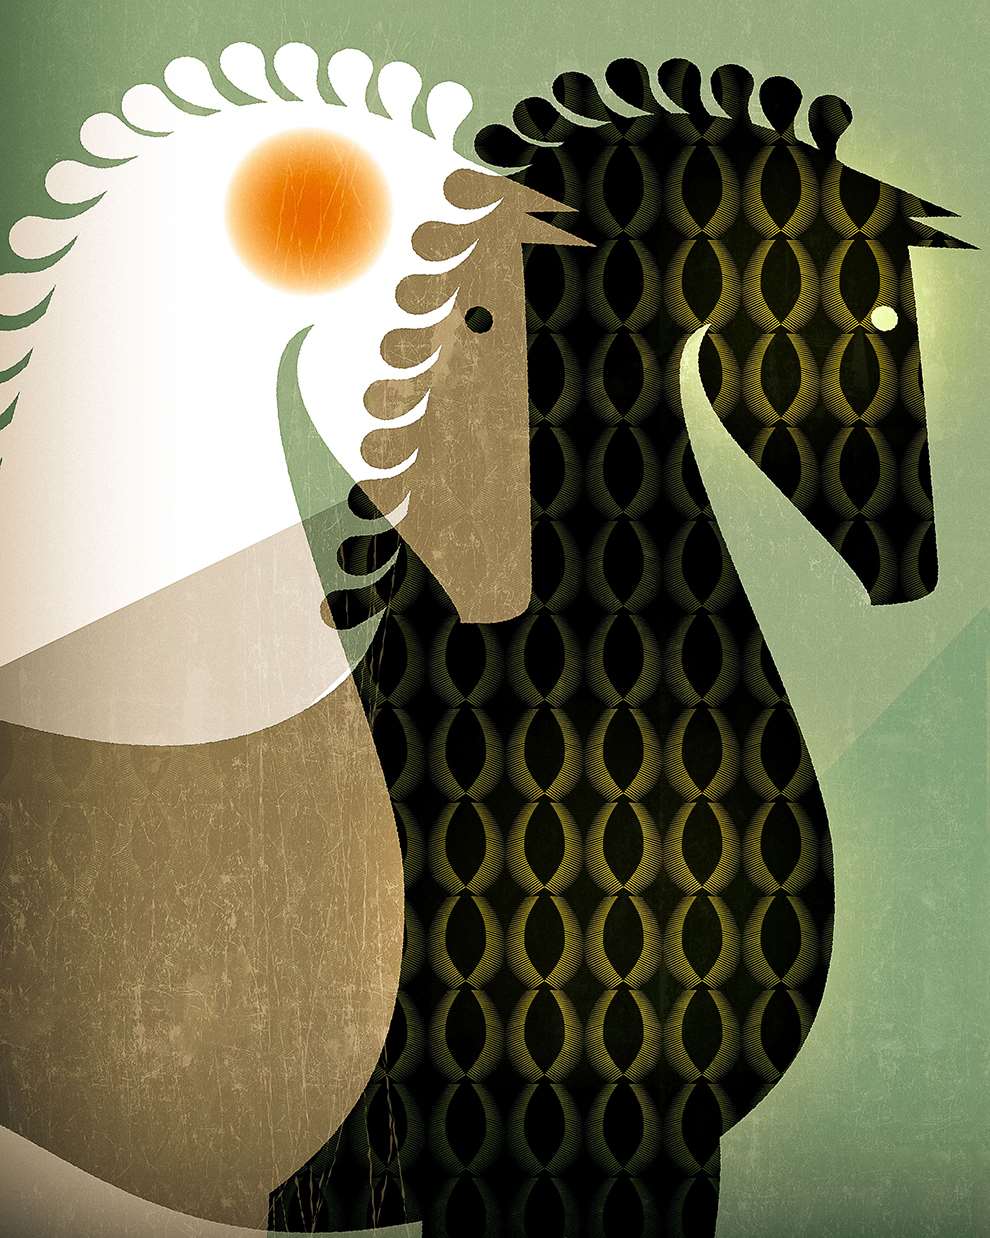 Paul Wearing, Pistachio horses. 